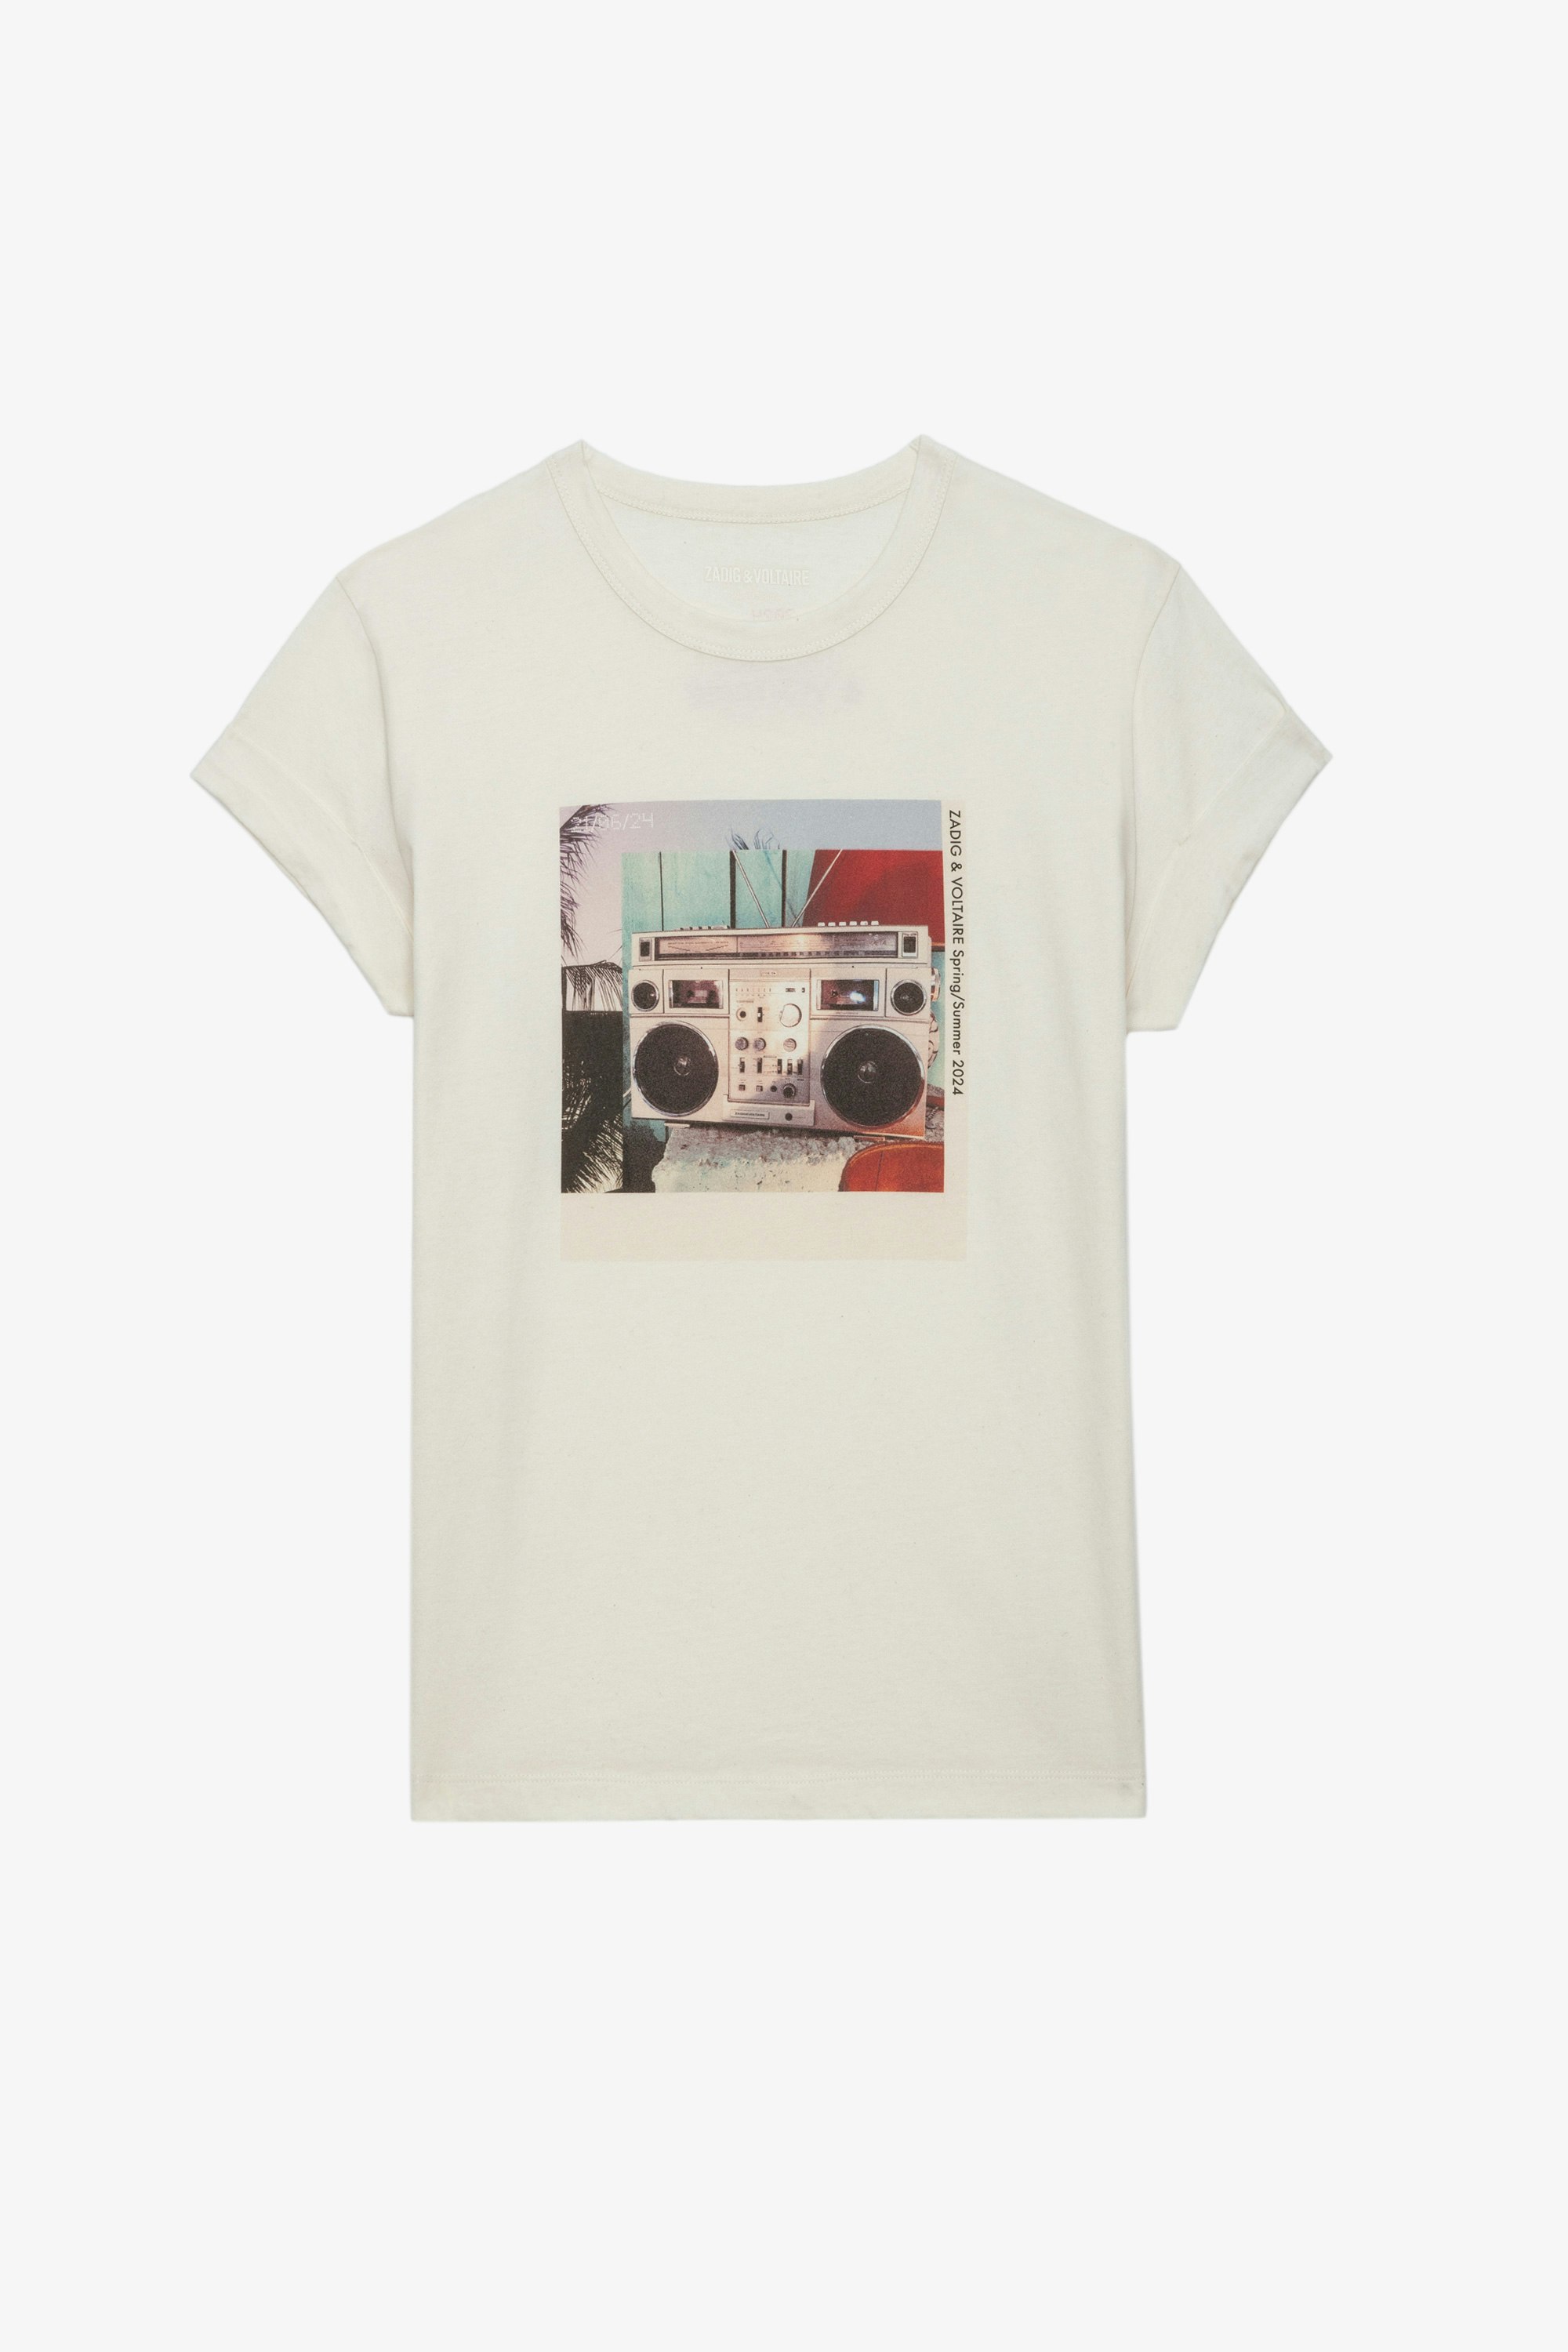 T-shirt Anya Photoprint - T-shirt en coton blanc à manches courtes et imprimé photoprint Ghetto Blaster.